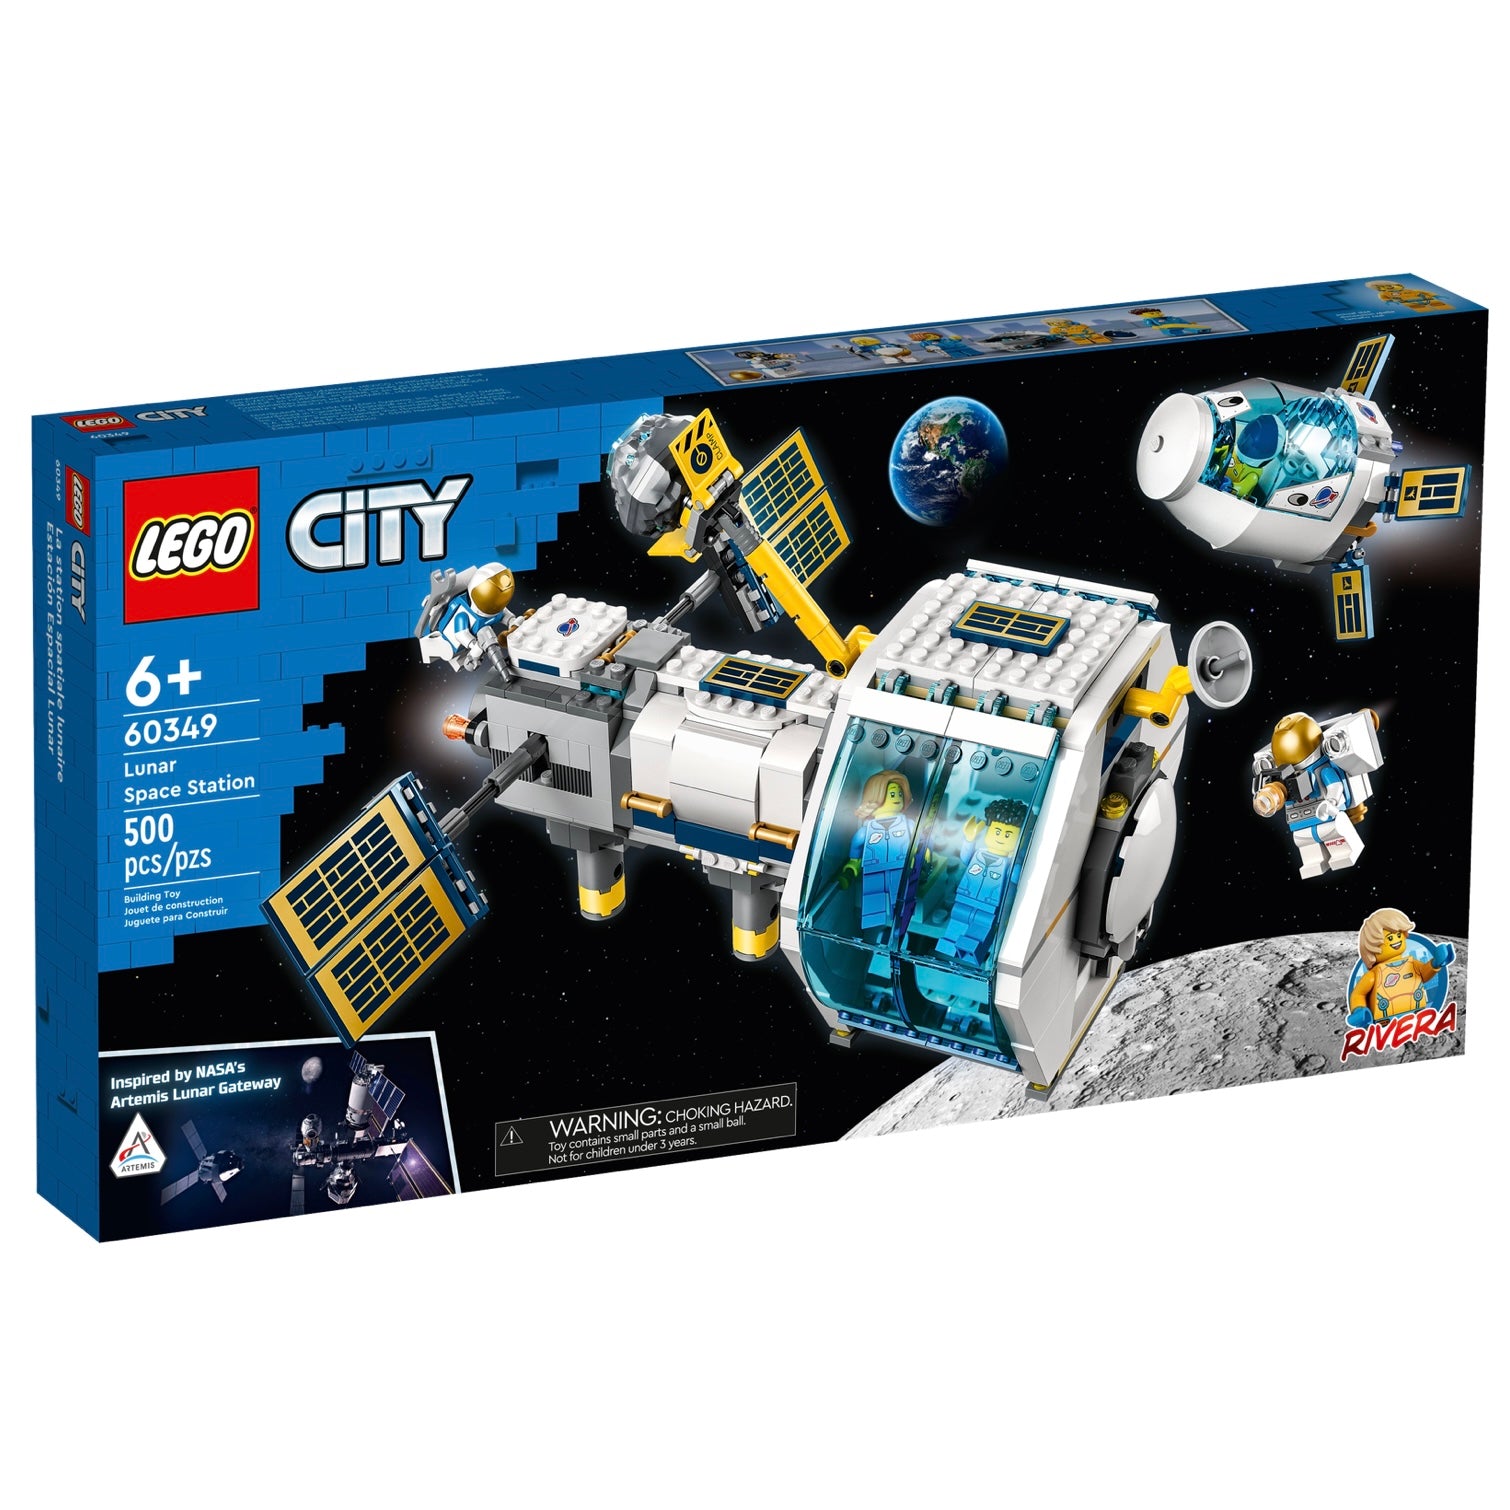 60349 City Lunar Space Station